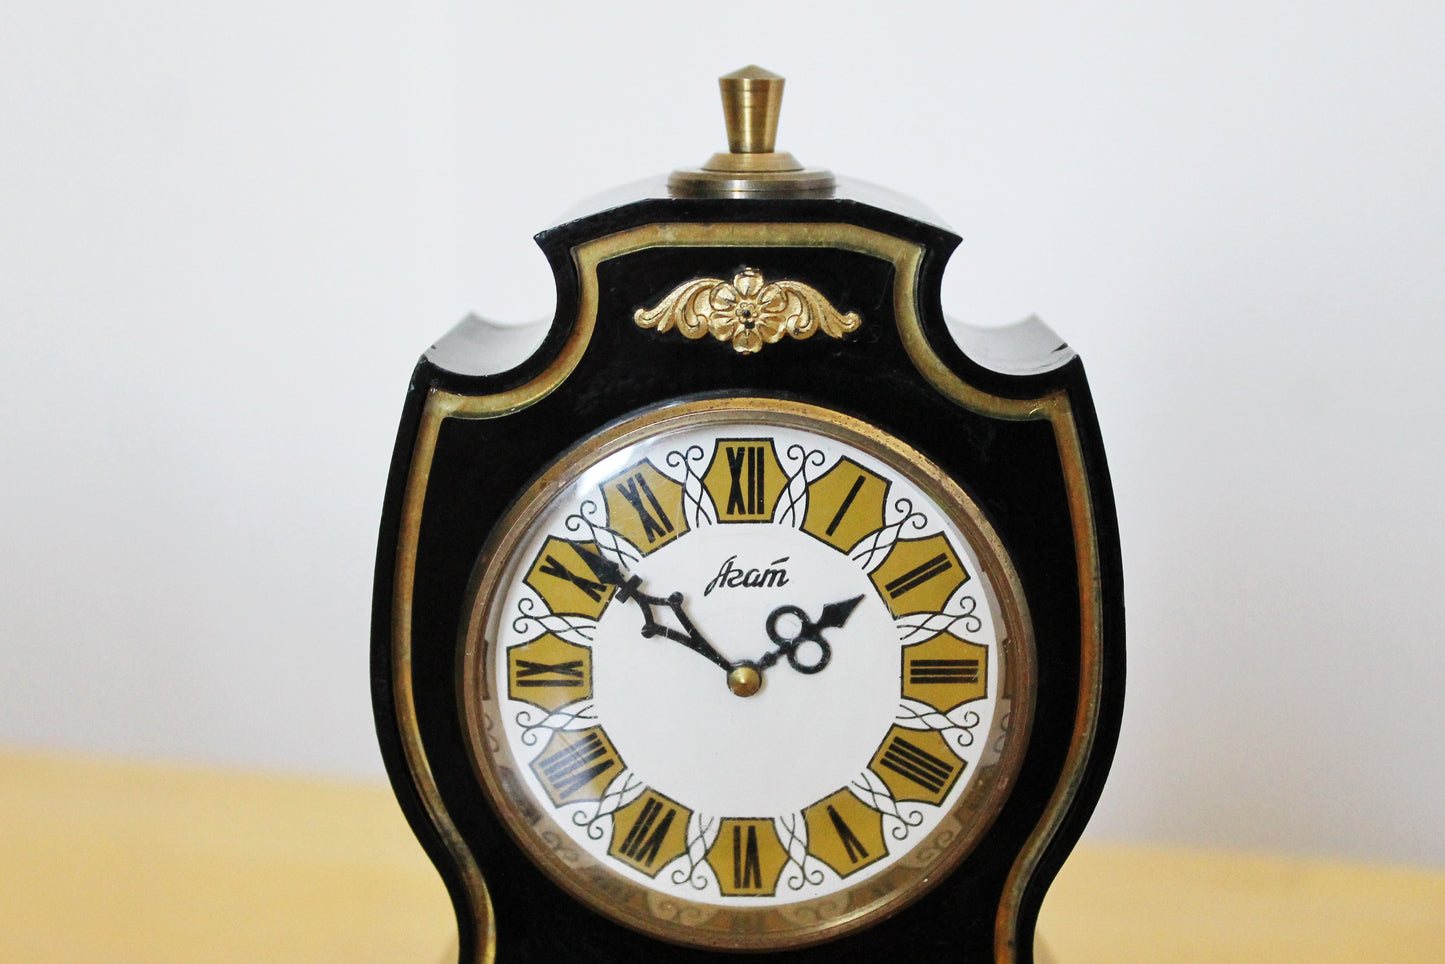 Mechanical alarm clock Agat - vintage clock from USSR era - 1960s-1970s - Soviet alarm clock